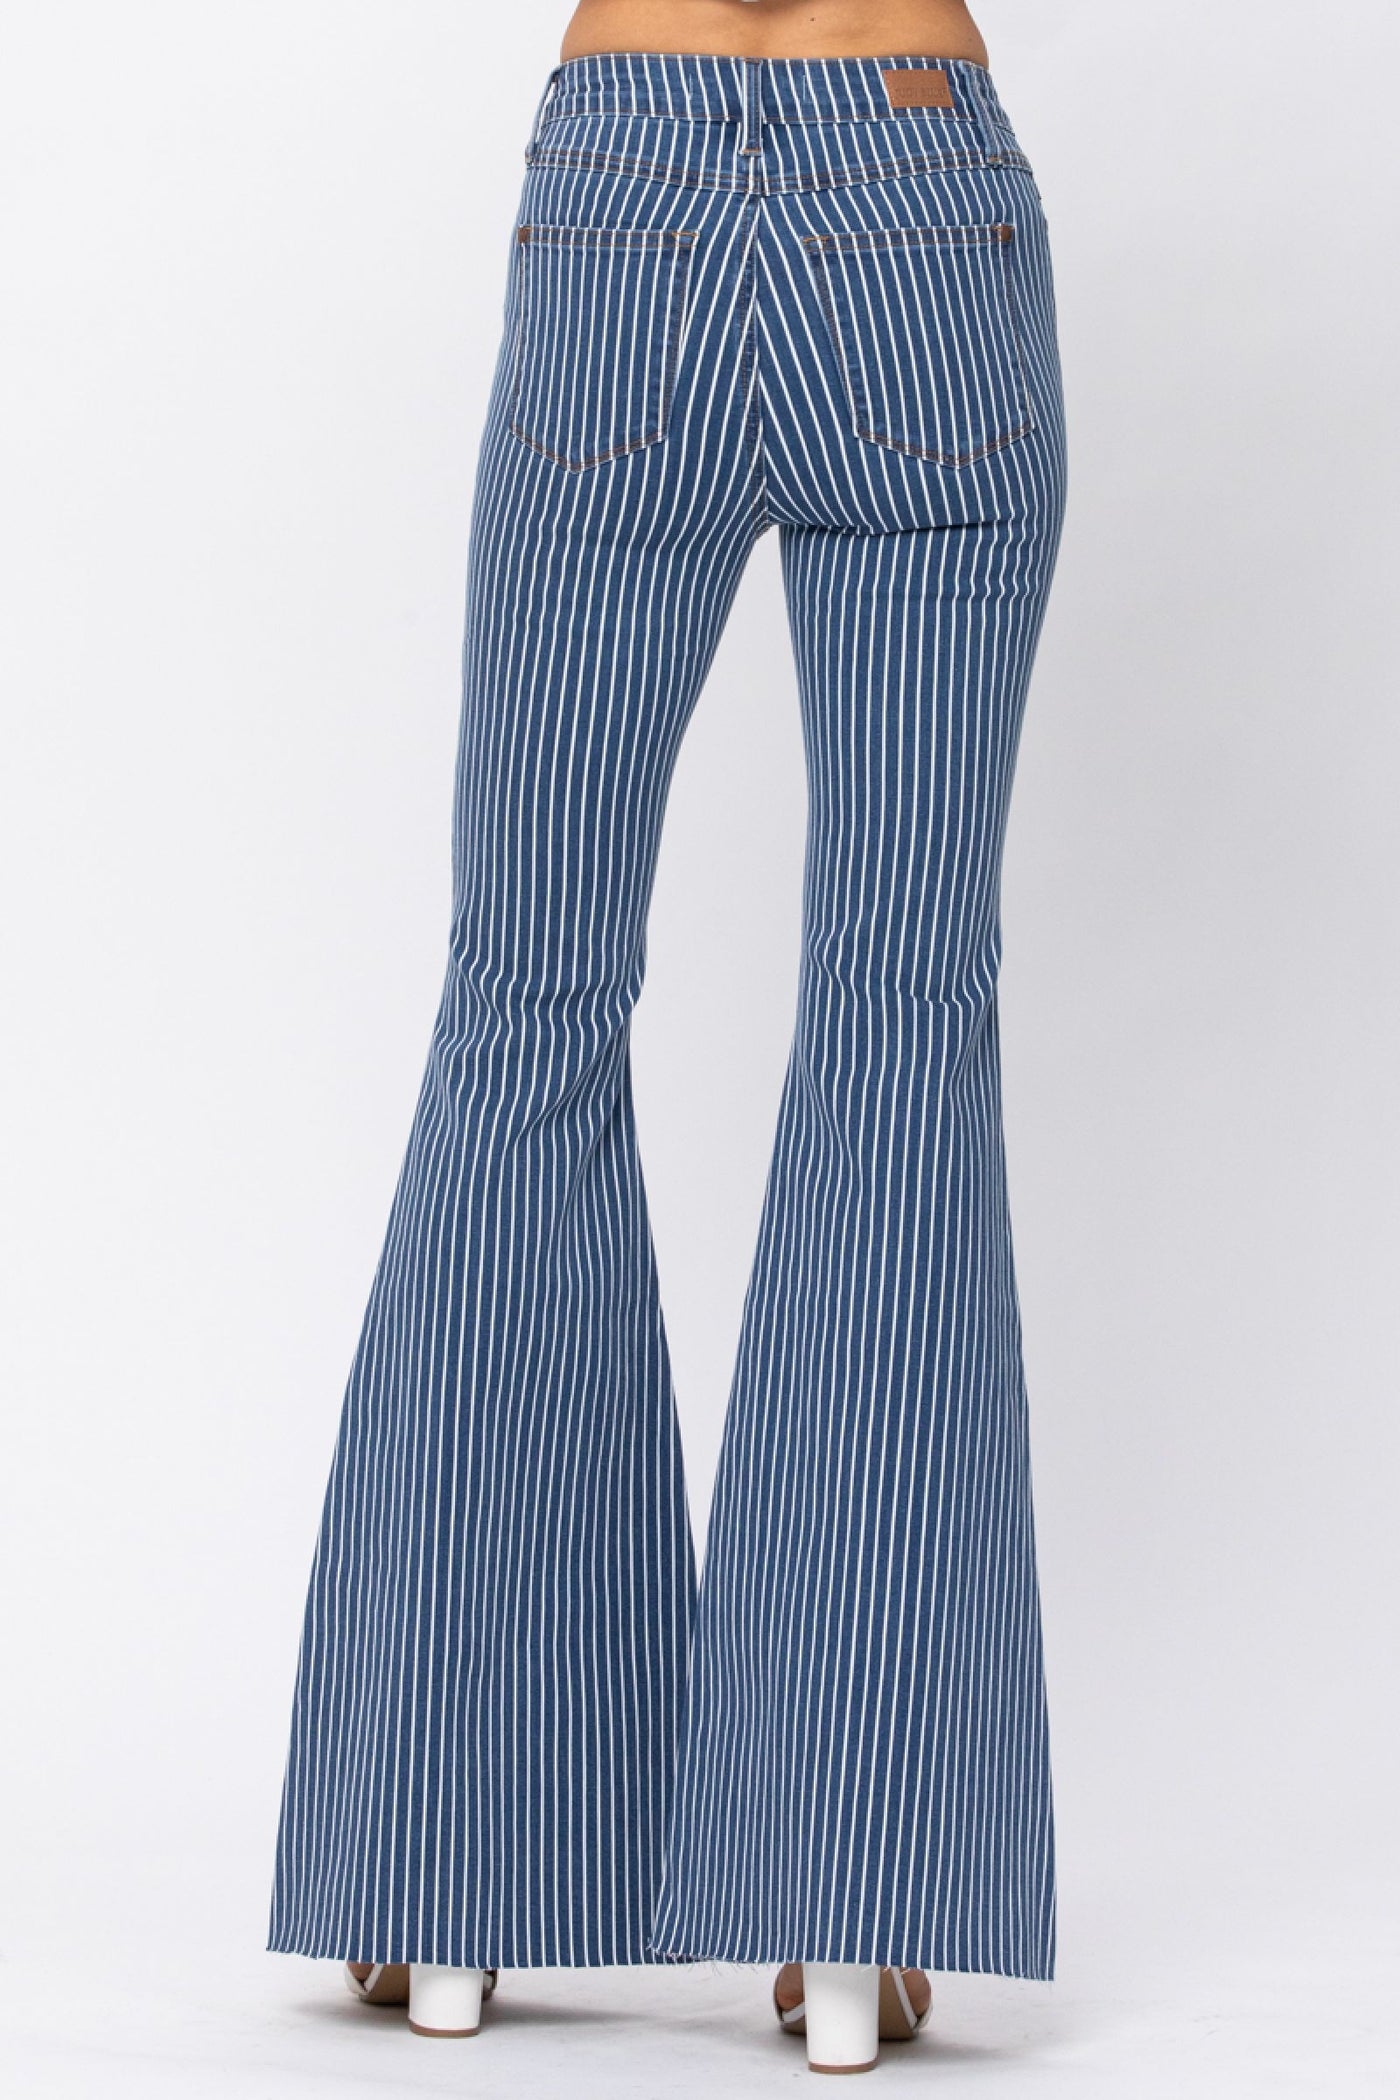 Judy Blue Striped Ultra High Rise Super Flare Jeans